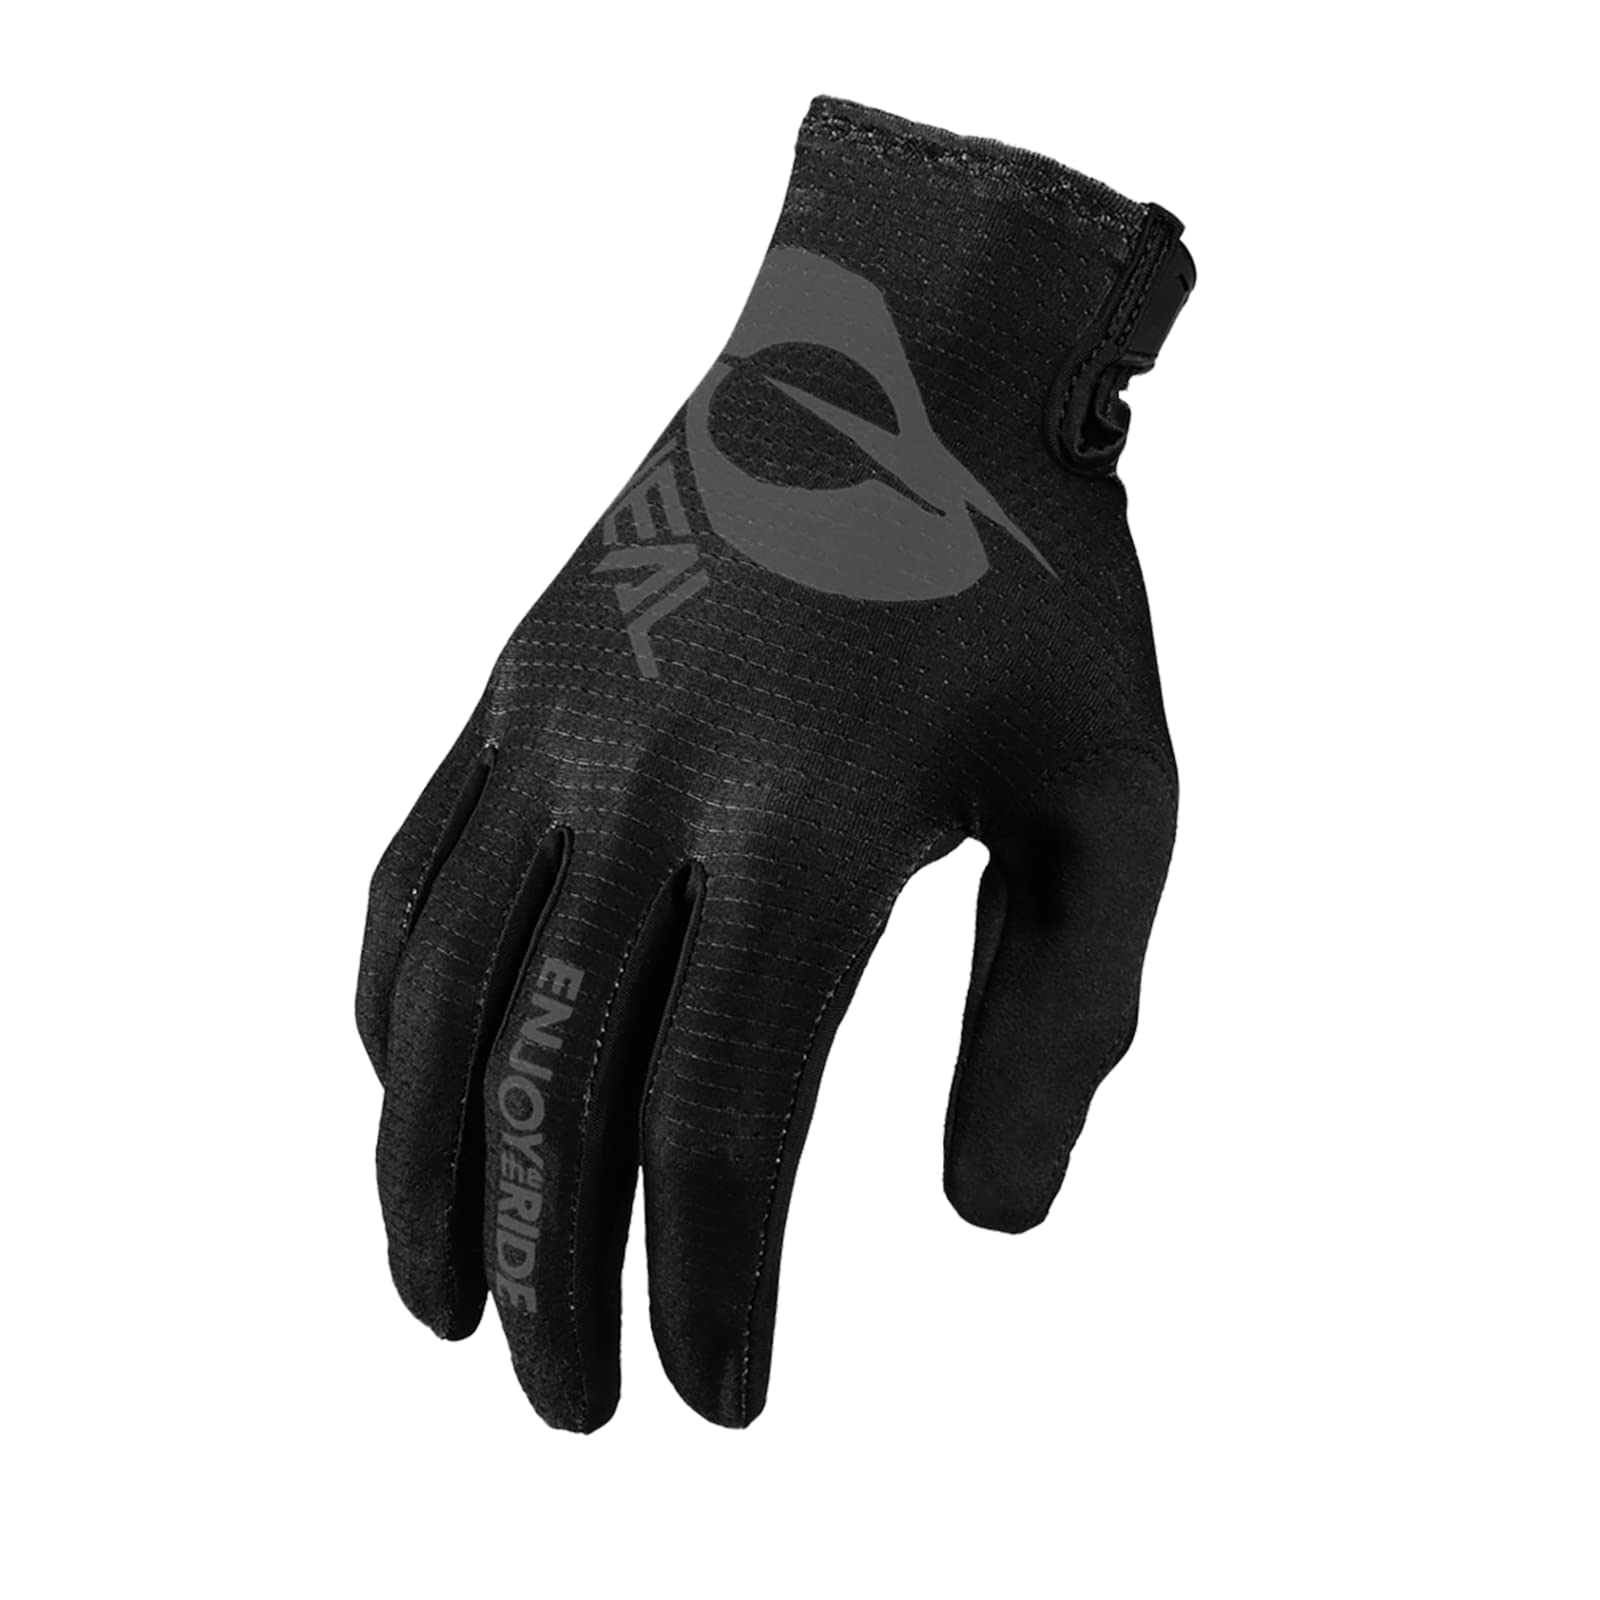 O'NEAL | Fahrrad- & Motocross-Handschuhe | MX MTB DH FR Downhill Freeride | Langlebige, Flexible Materialien, belüftete Handoberseite | Matrix Glove | Erwachsene | Schwarz Grau | Größe XXL von O'NEAL